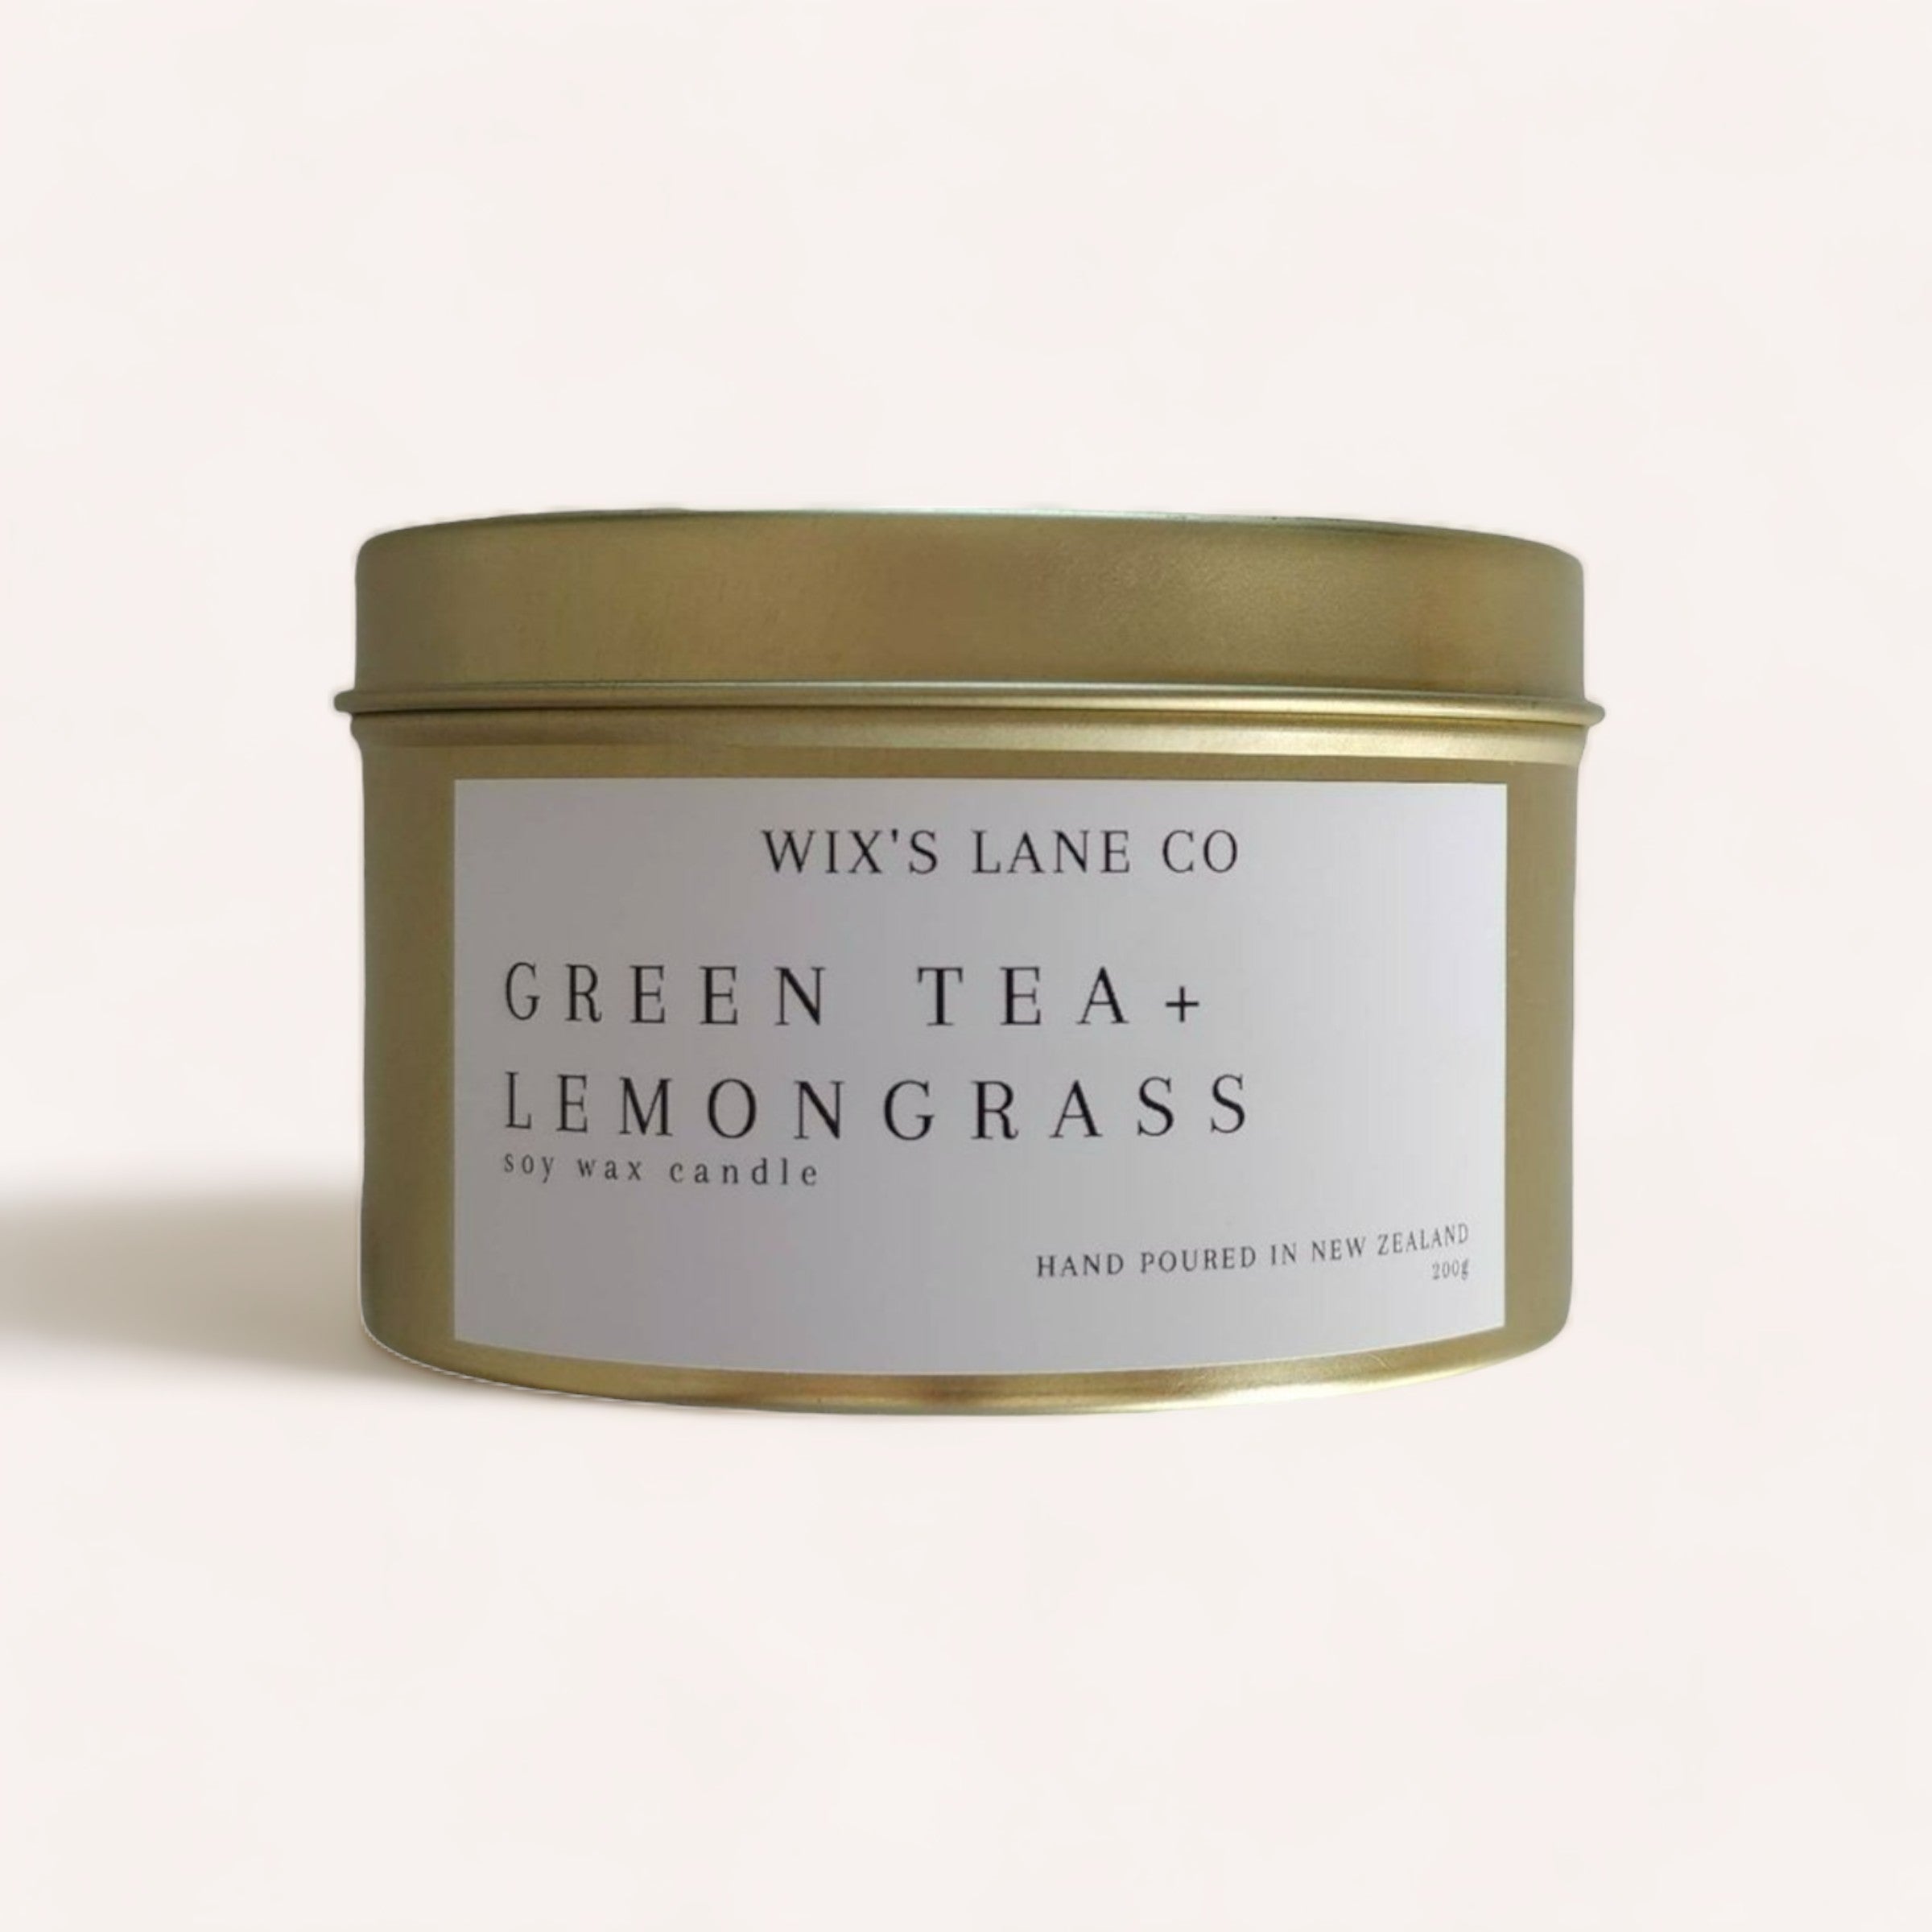 green tea & lemongrass candle by wix's lane co